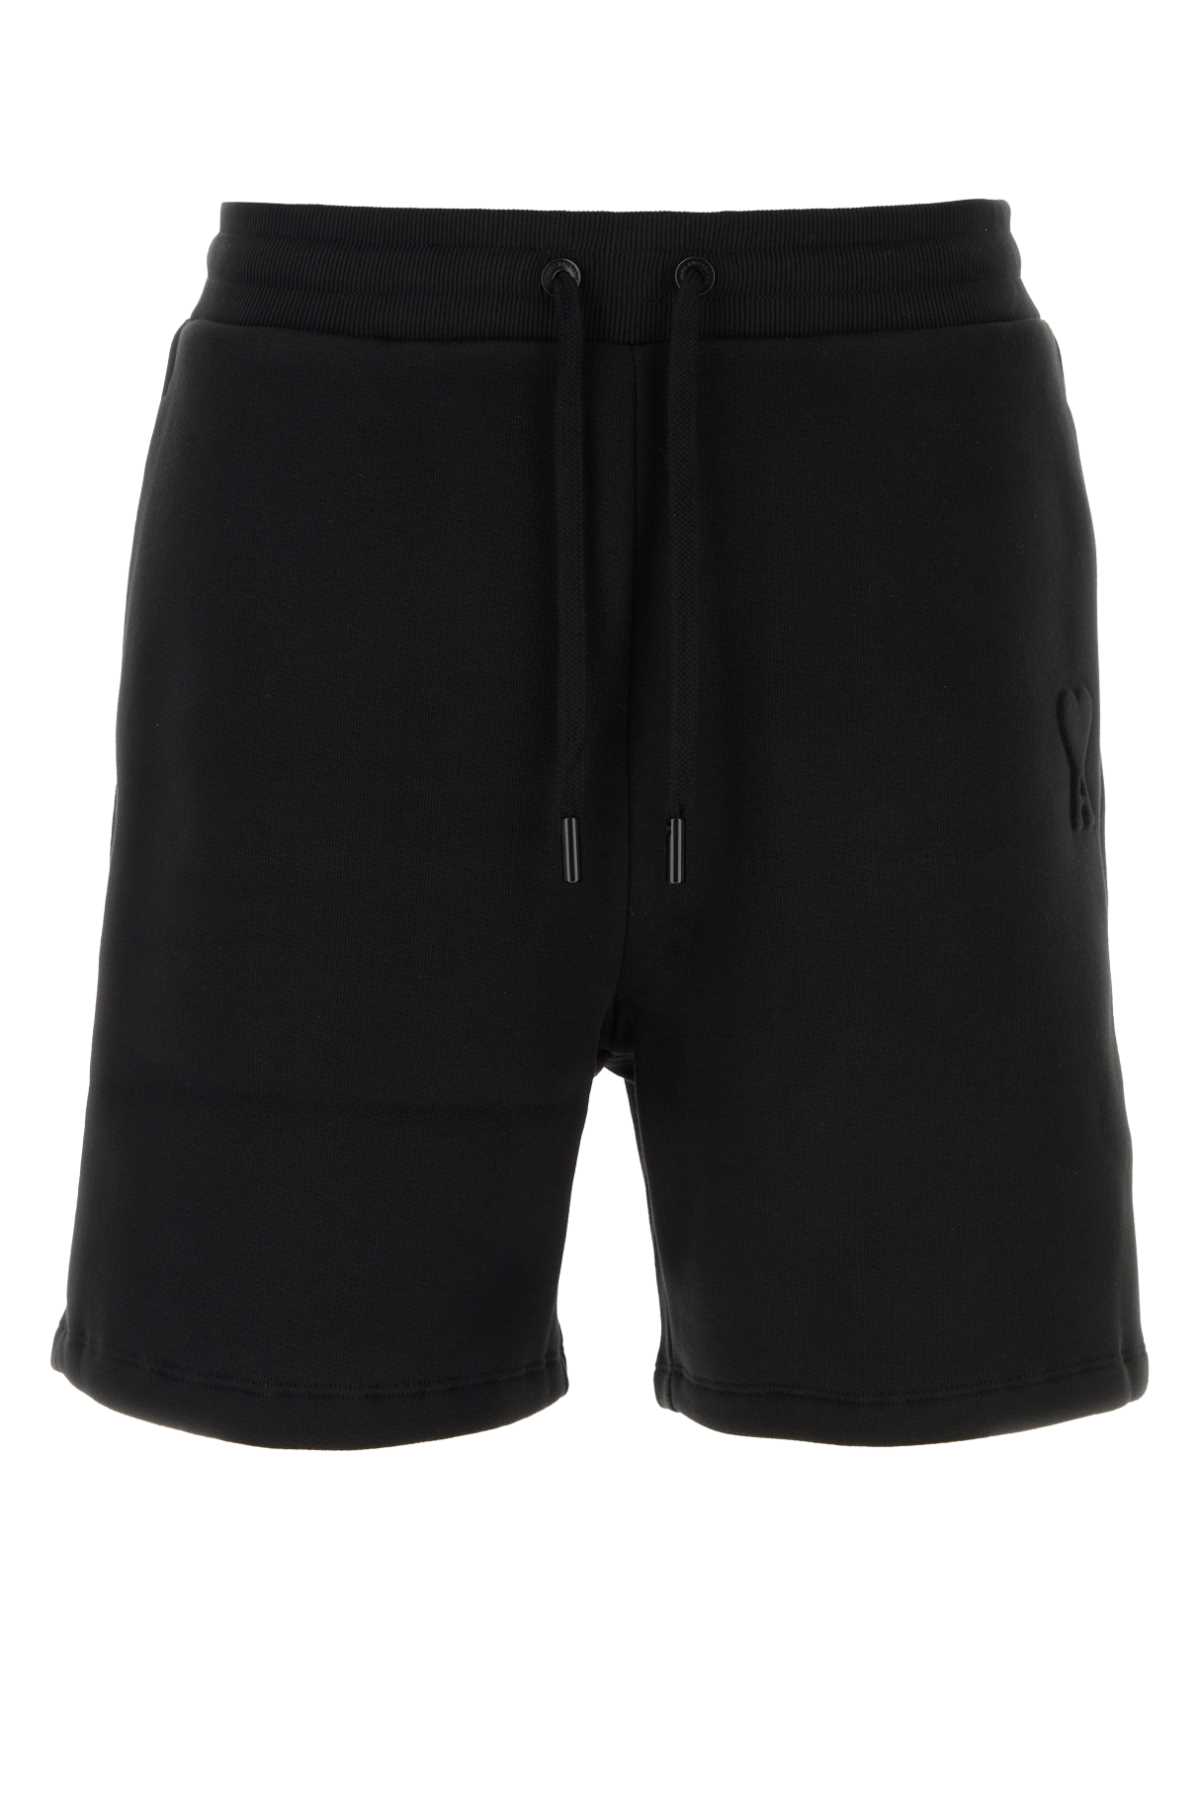 Ami Alexandre Mattiussi Black Cotton Blend Bermuda Shorts